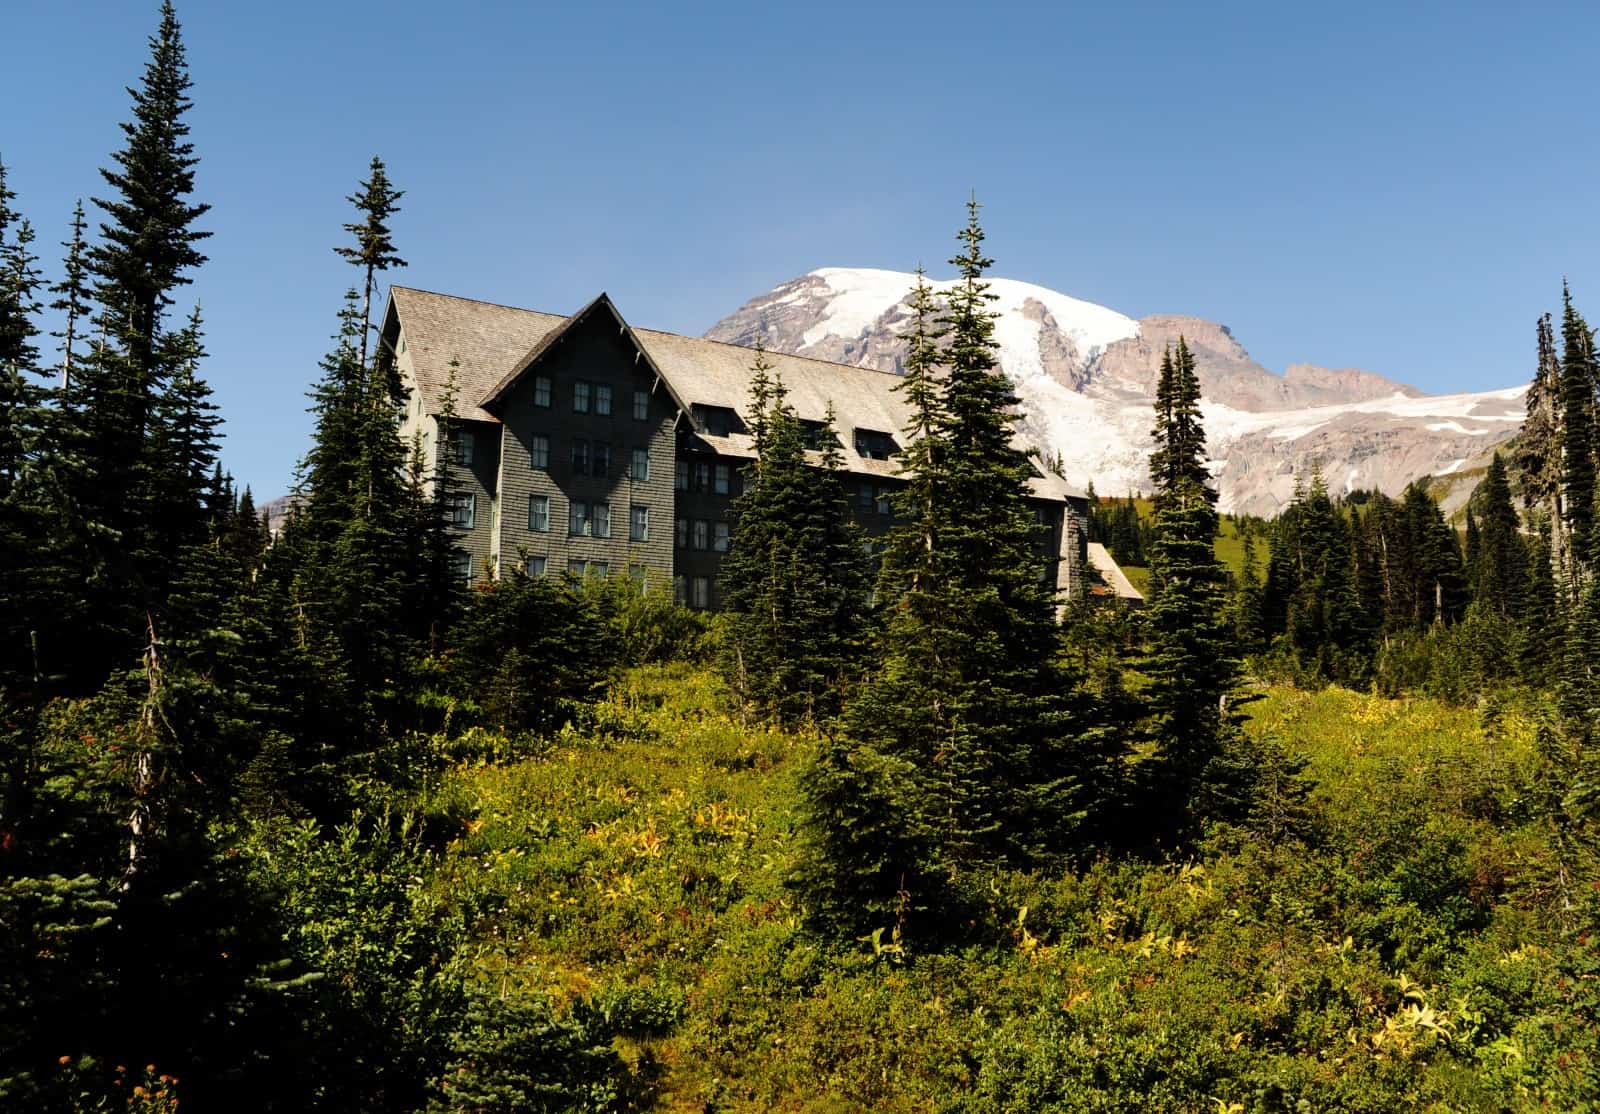 The Paradise Inn nestled below the top of Mt. Rainier